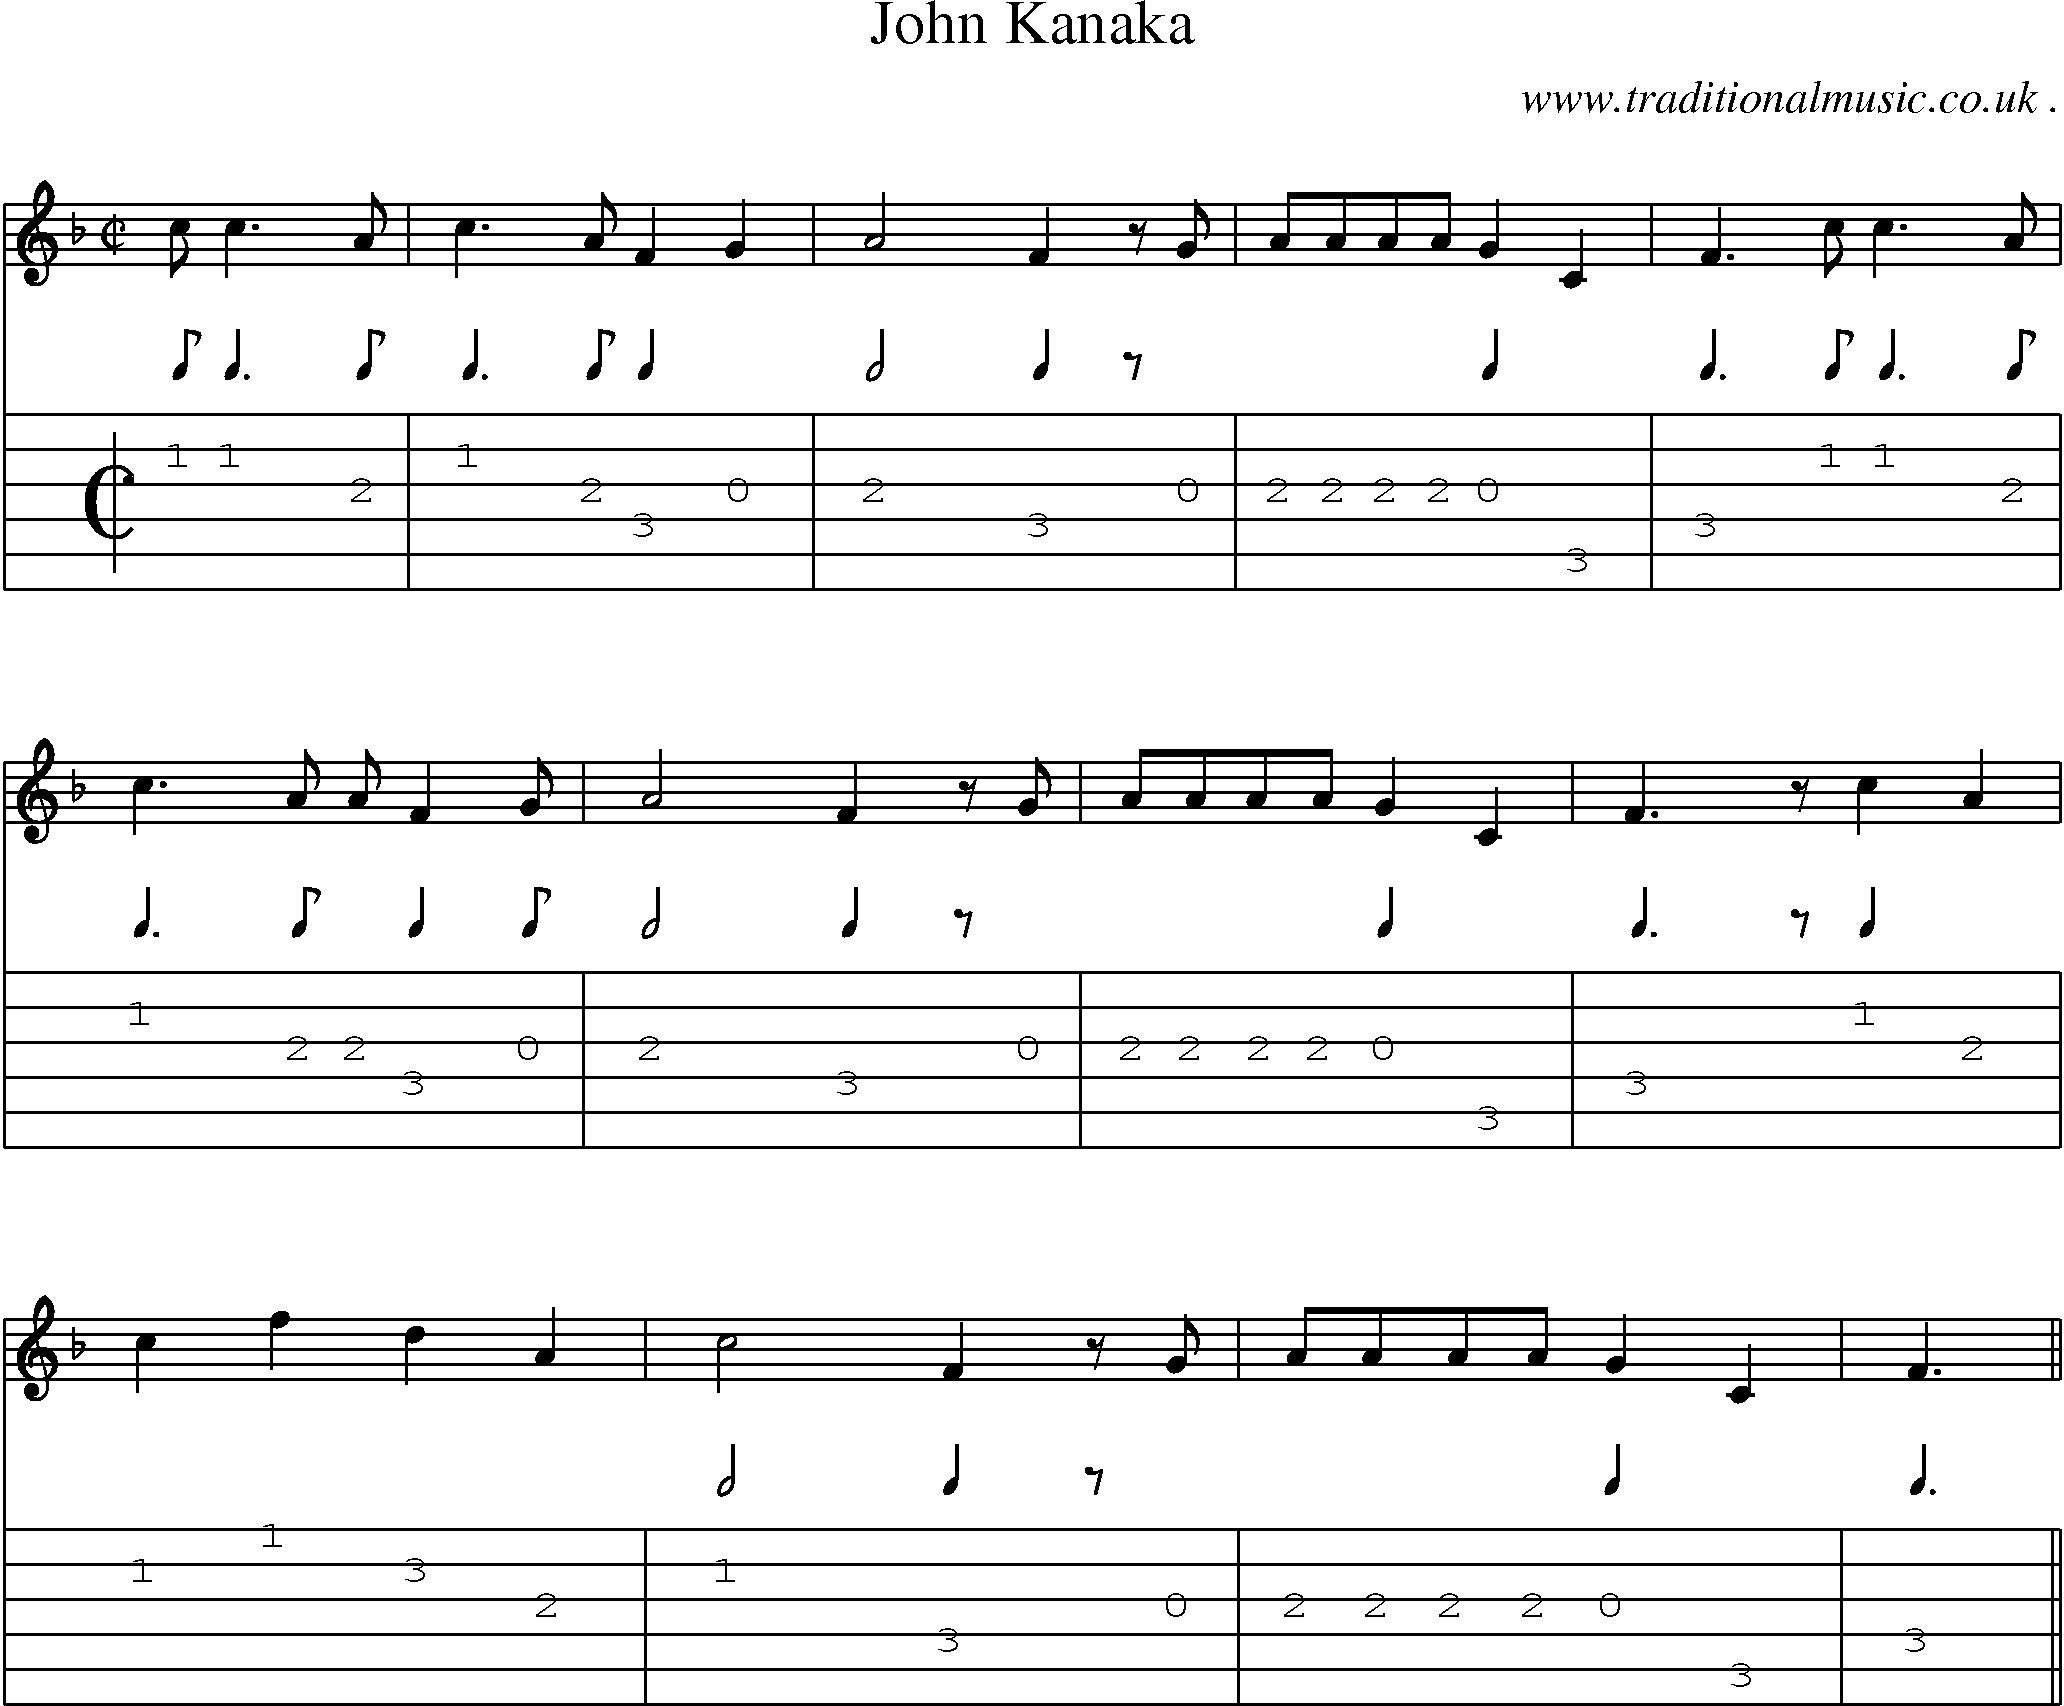 Sheet-Music and Guitar Tabs for John Kanaka